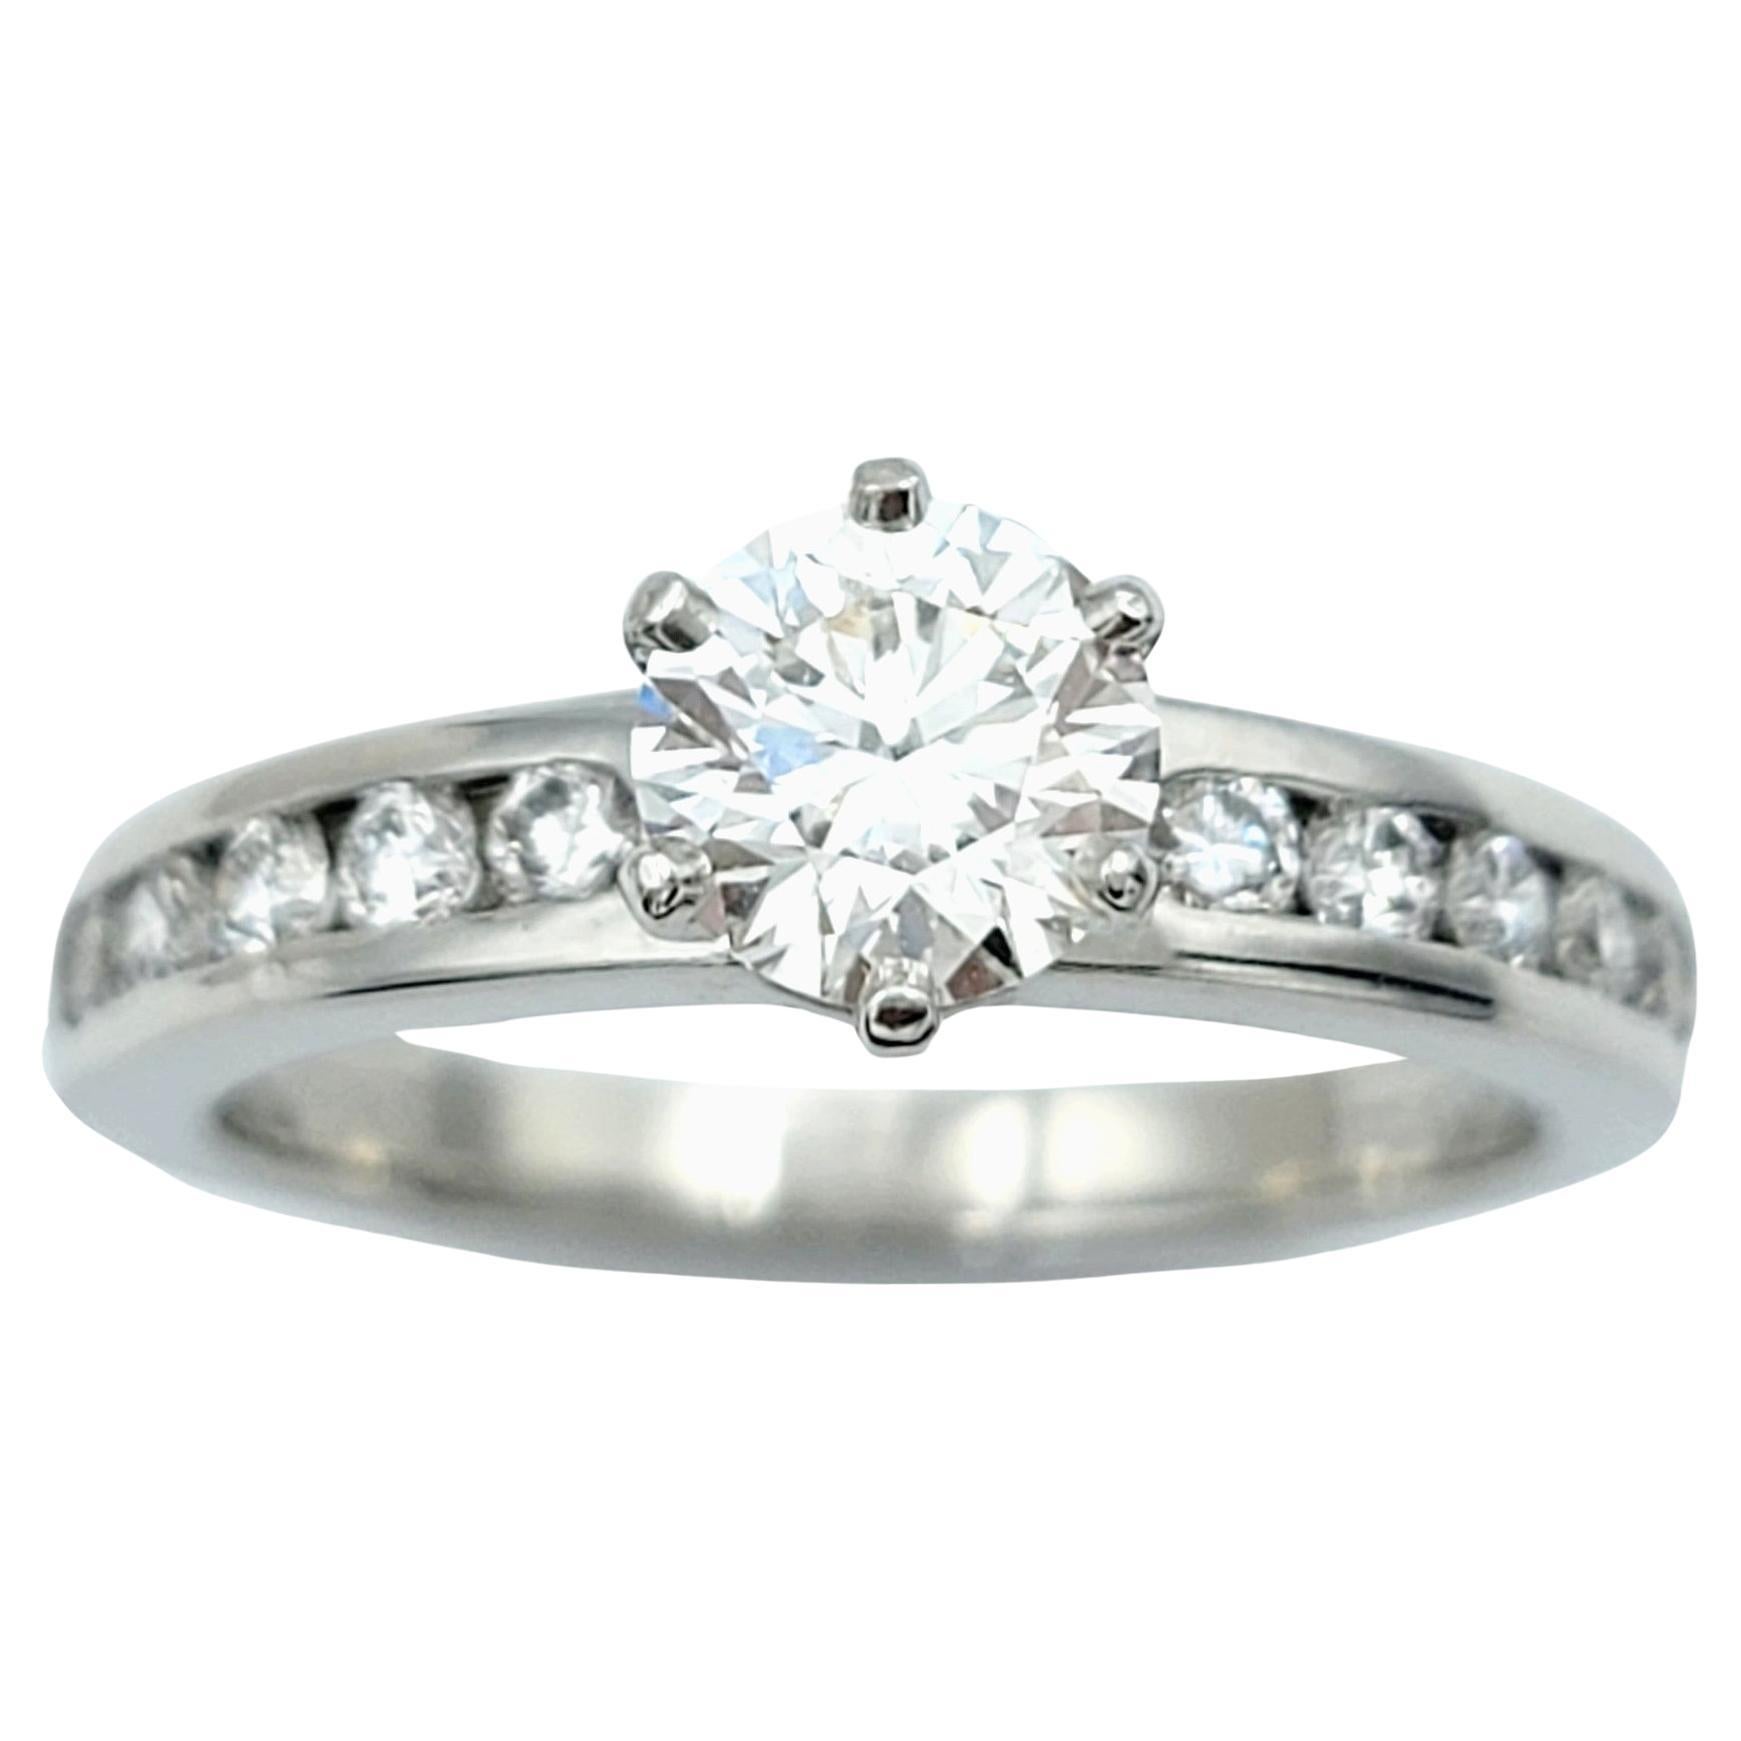 Tiffany & Co. .73 Carat Round Diamond Platinum Engagement Ring 10 Diamond Band 